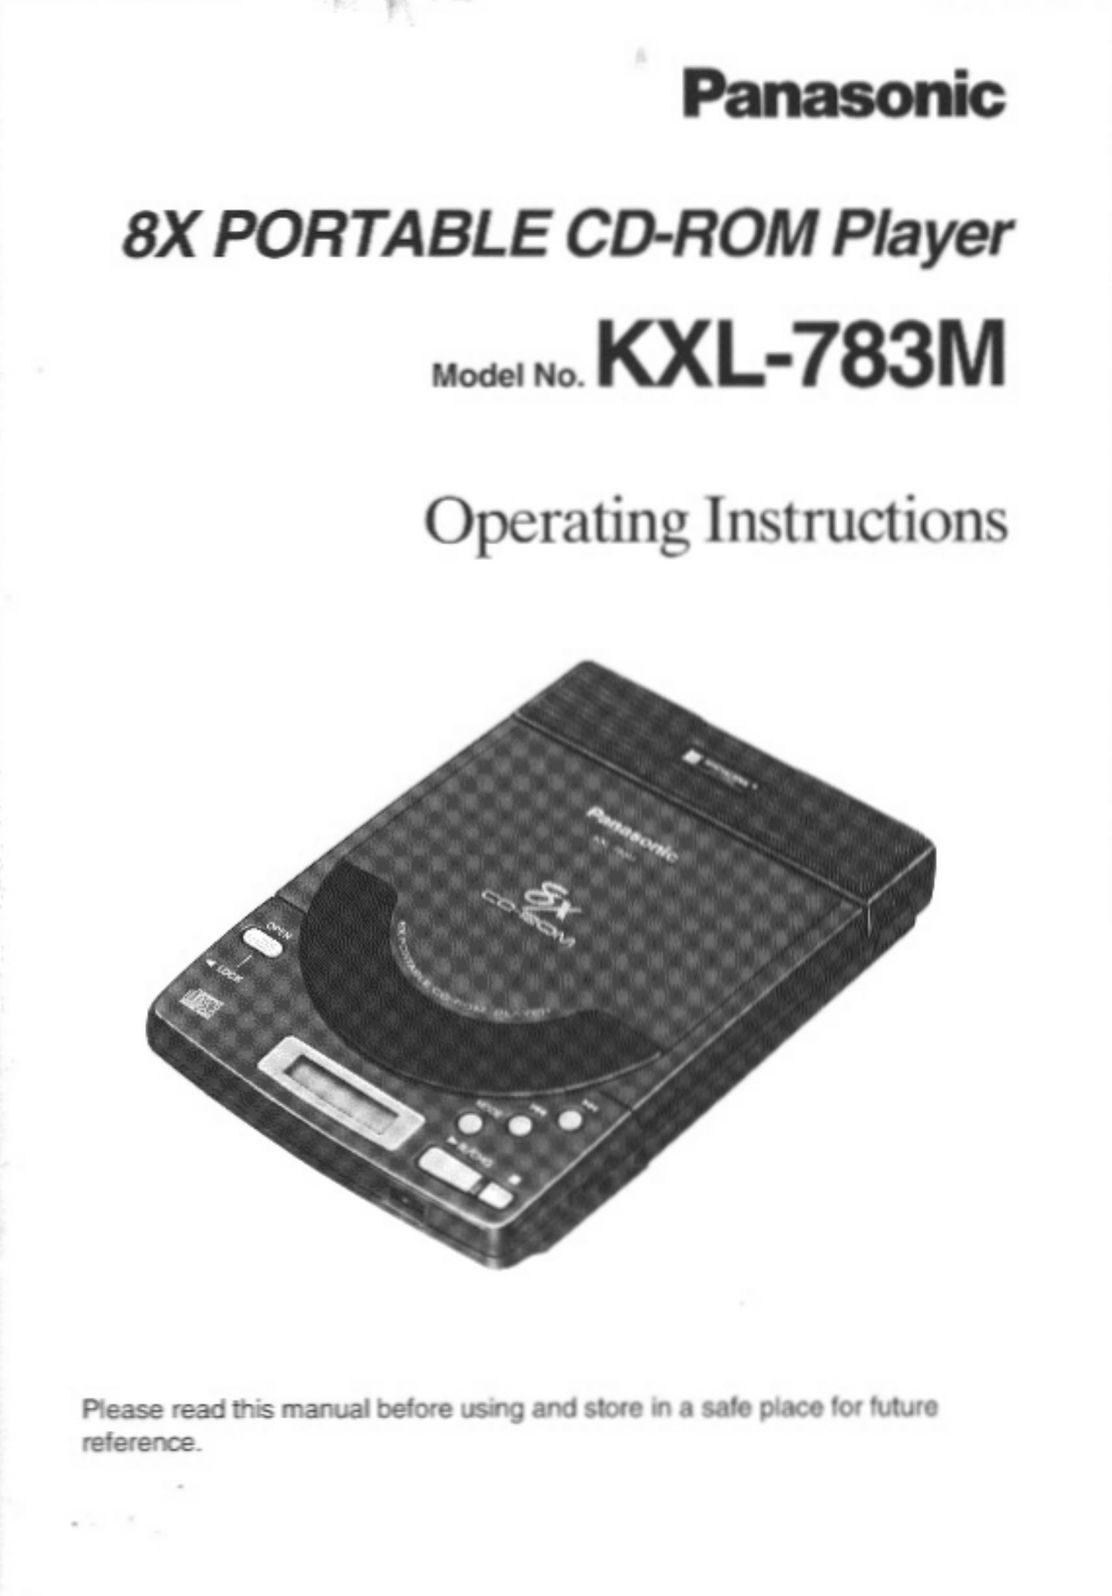 Panasonic KXL-783M Portable CD Player User Manual